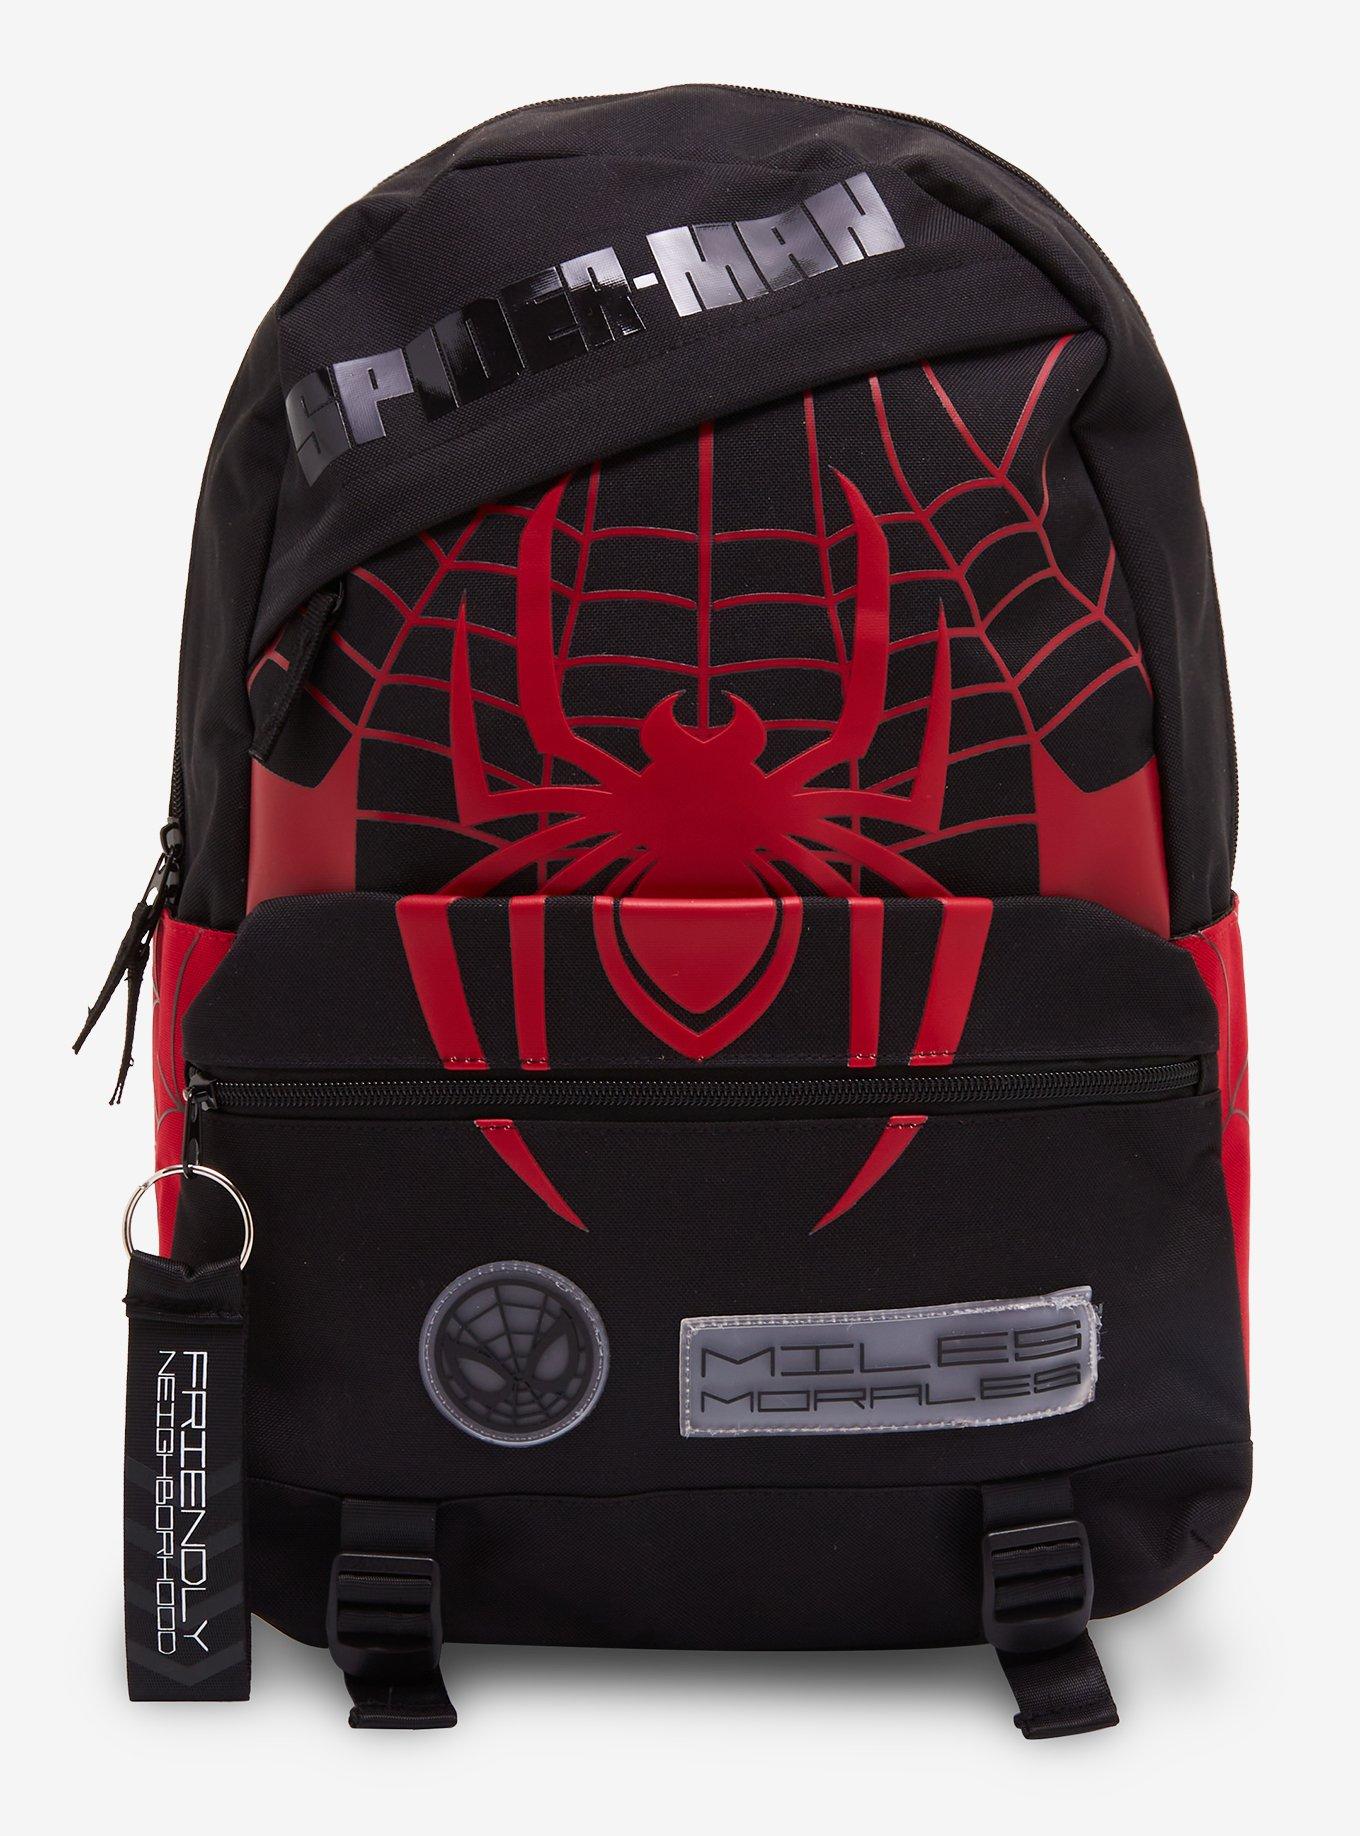 black cat pink backpack spiderman